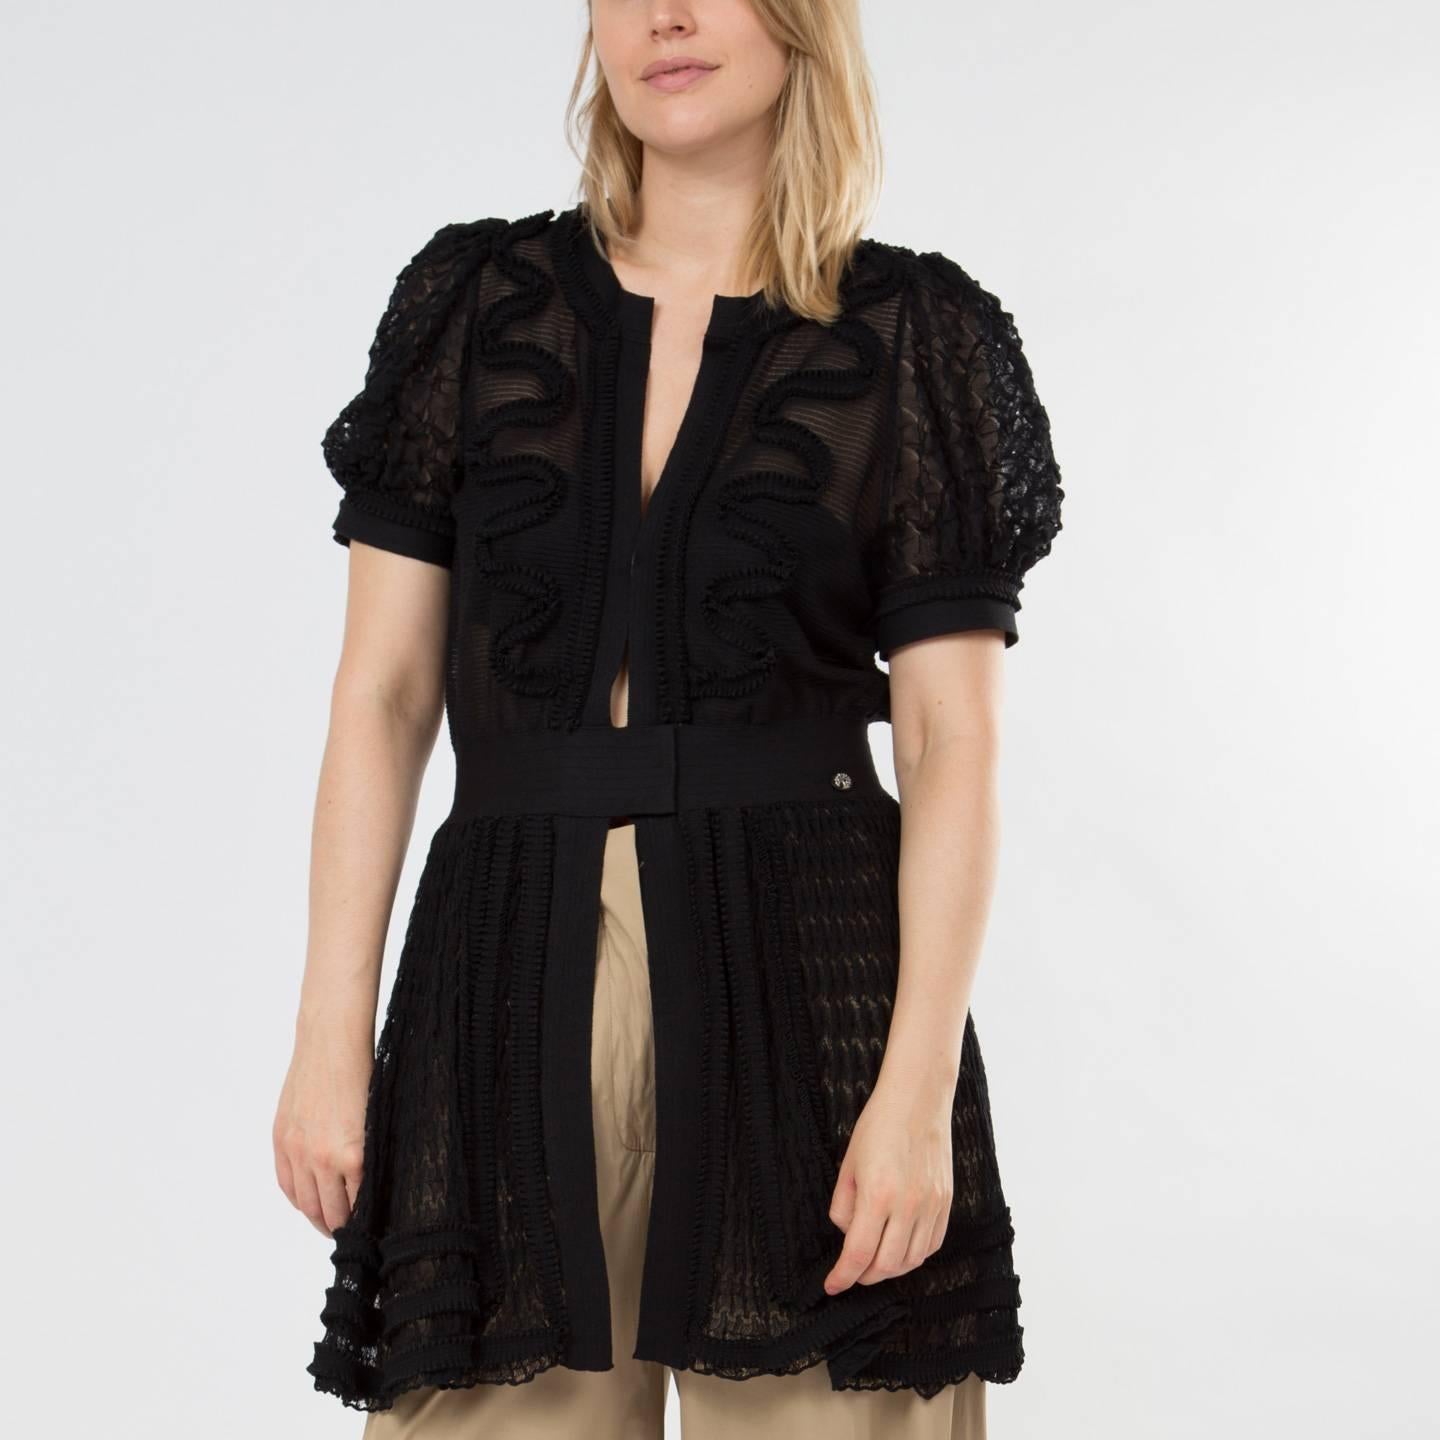 Chanel Black Knit Open Front Coat Dress For Sale 1